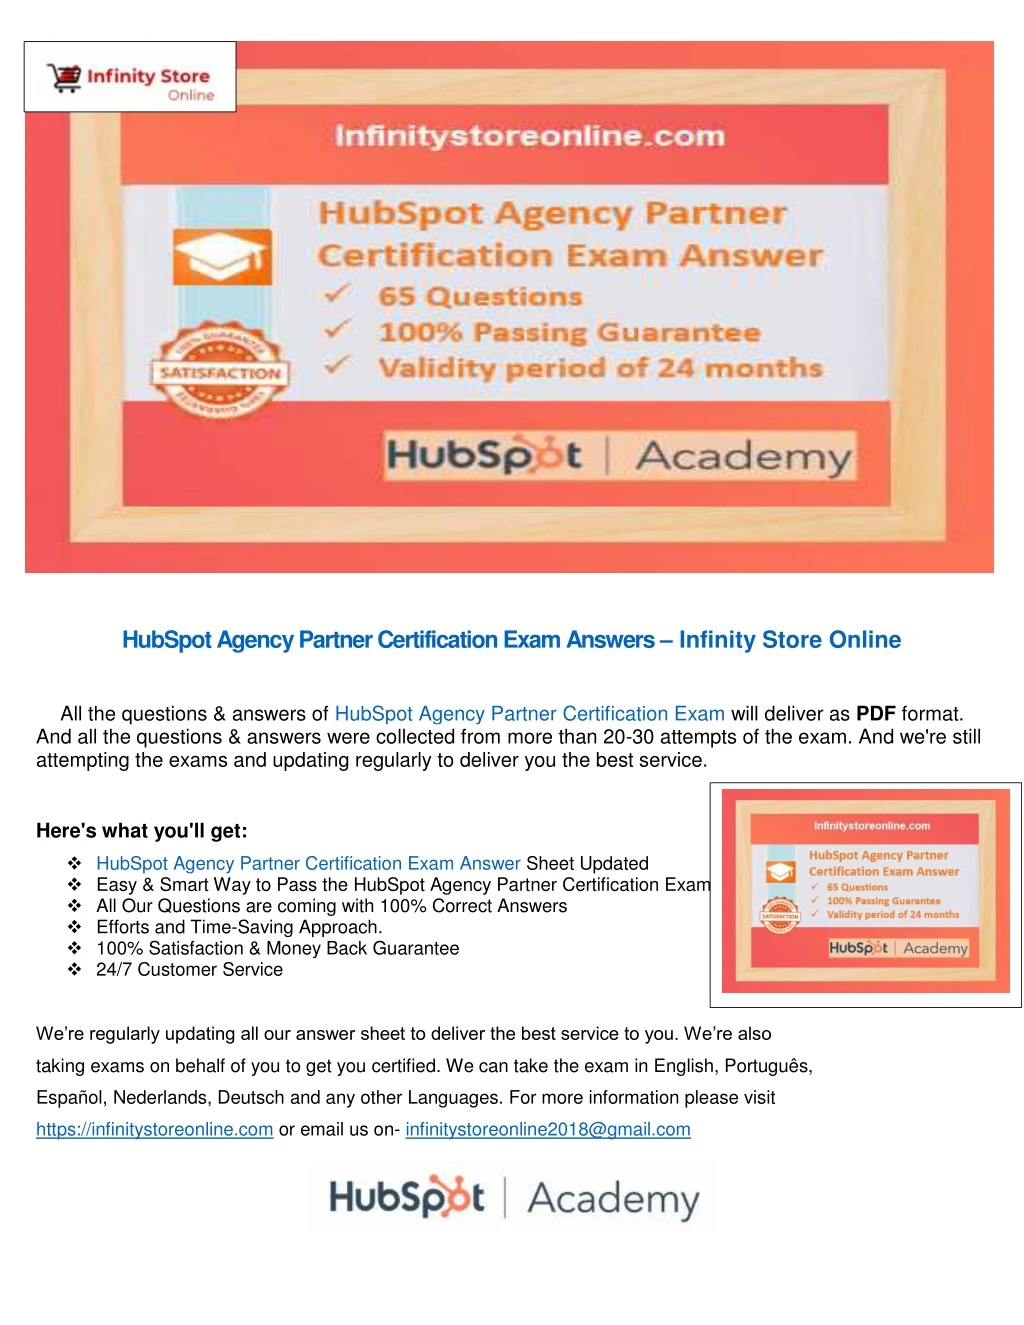 hubspot agency partner certification exam answers